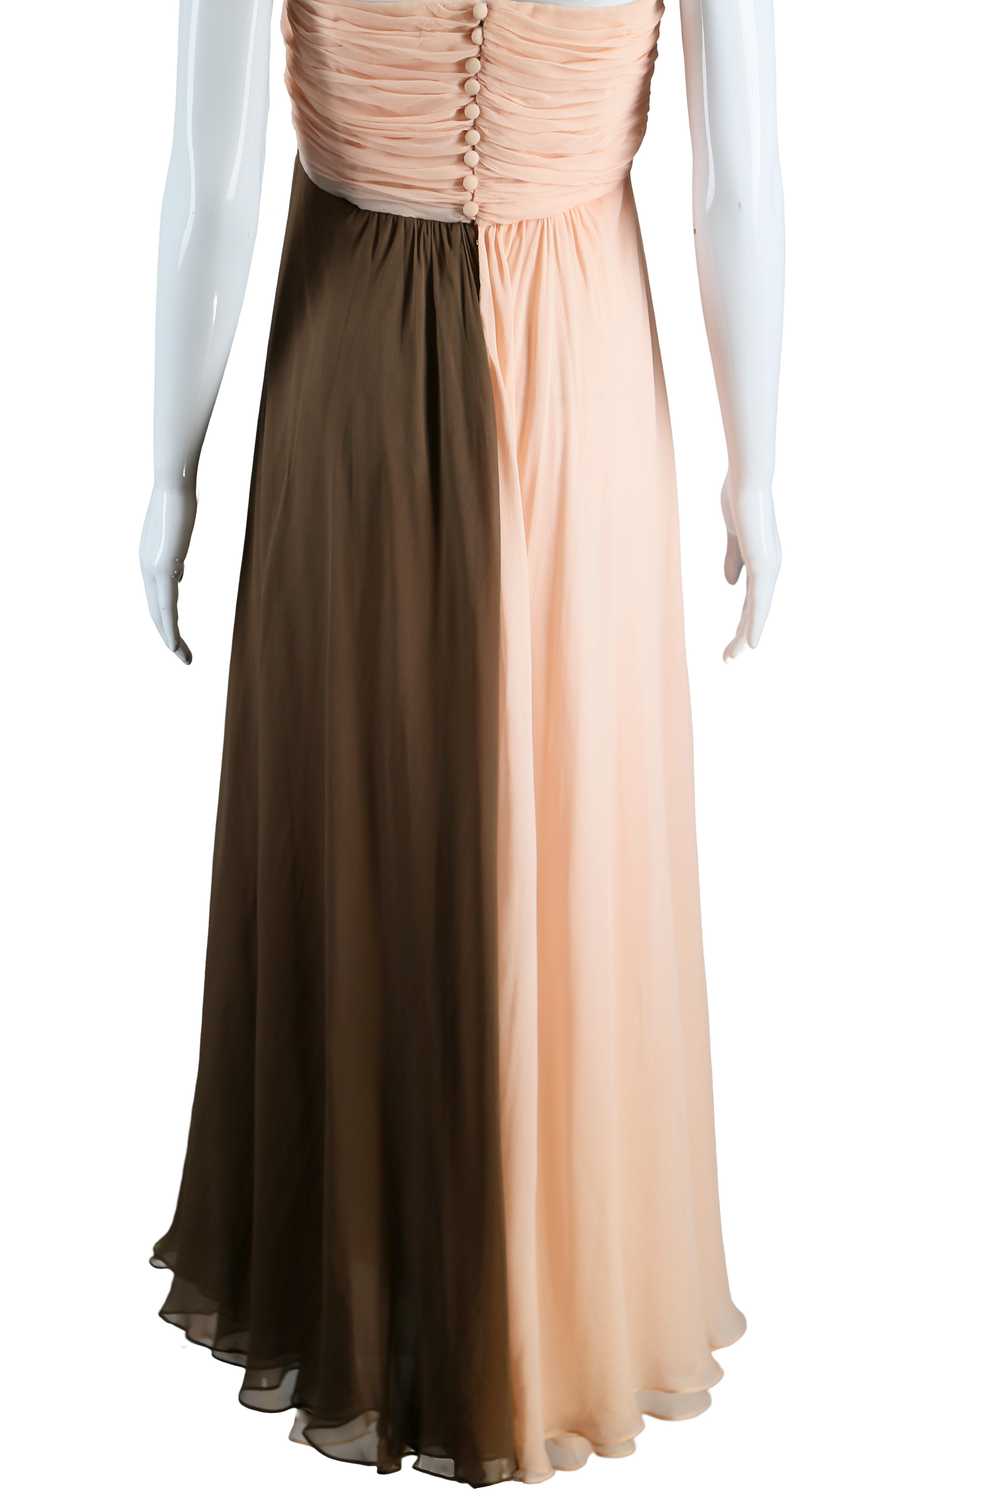 Bill Blass Grecian Silk Chiffon Gown - image 12